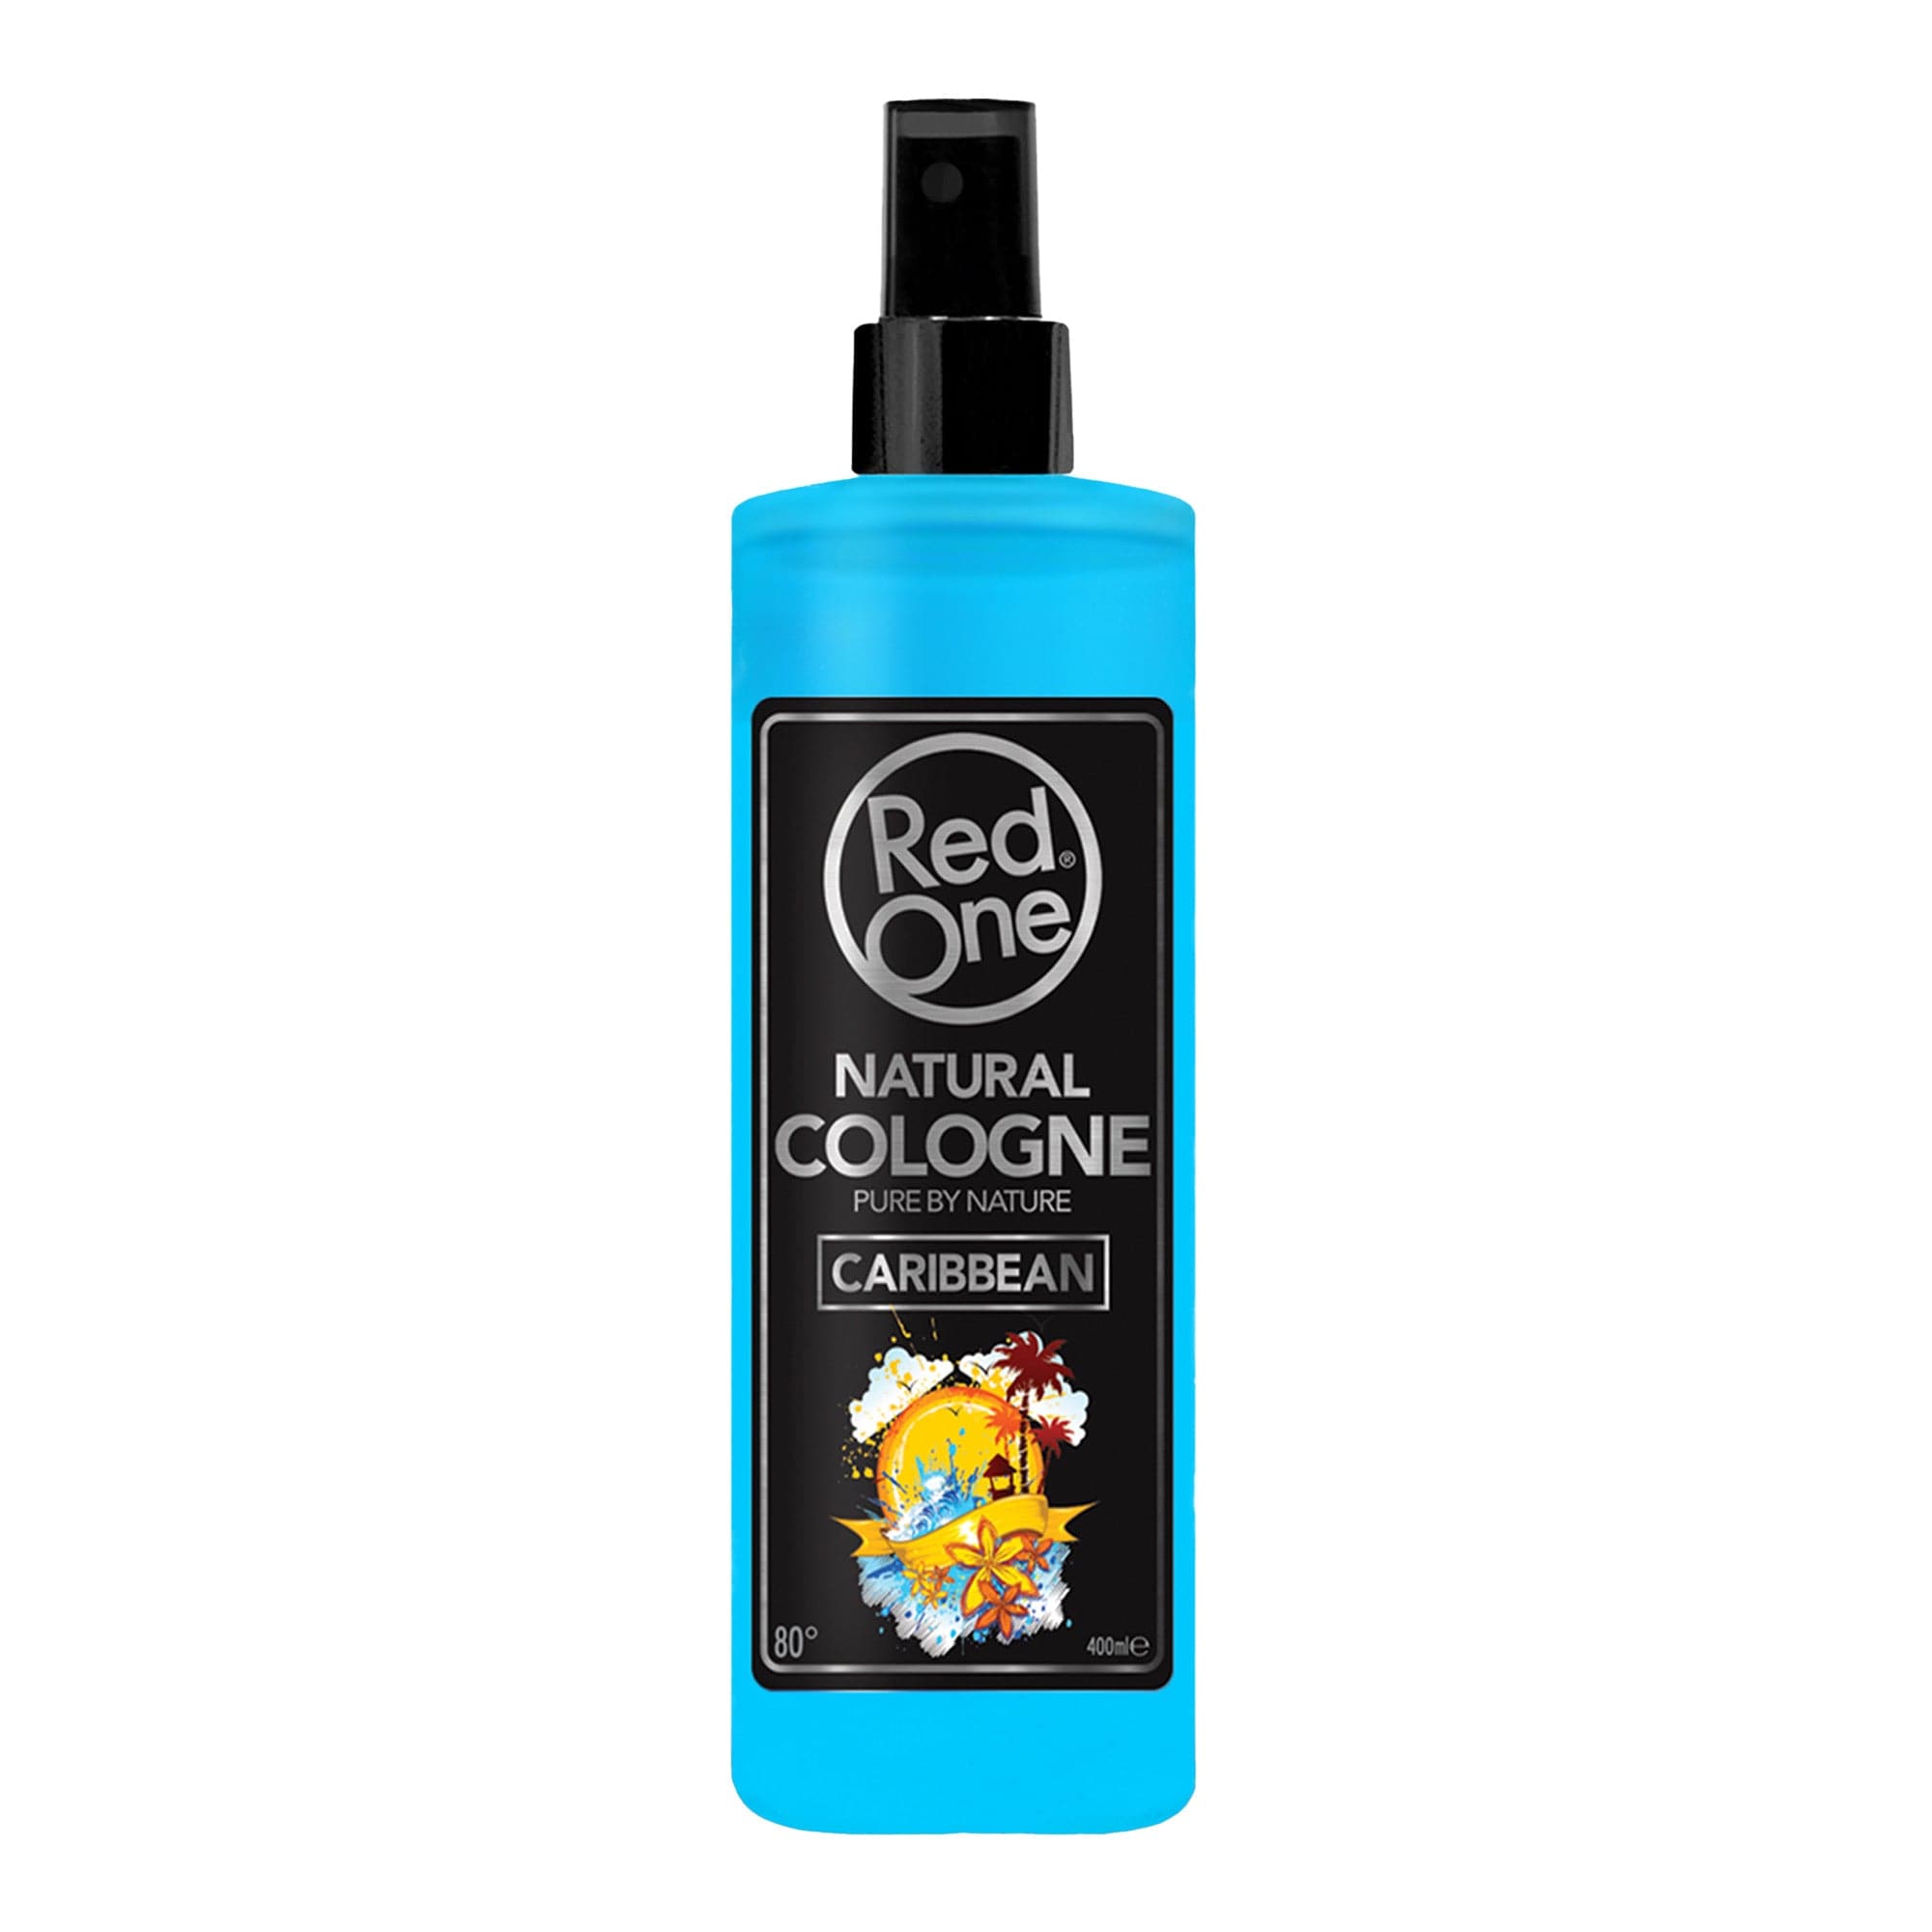 Redone - Natural Cologne Spray Caribbean 400ml